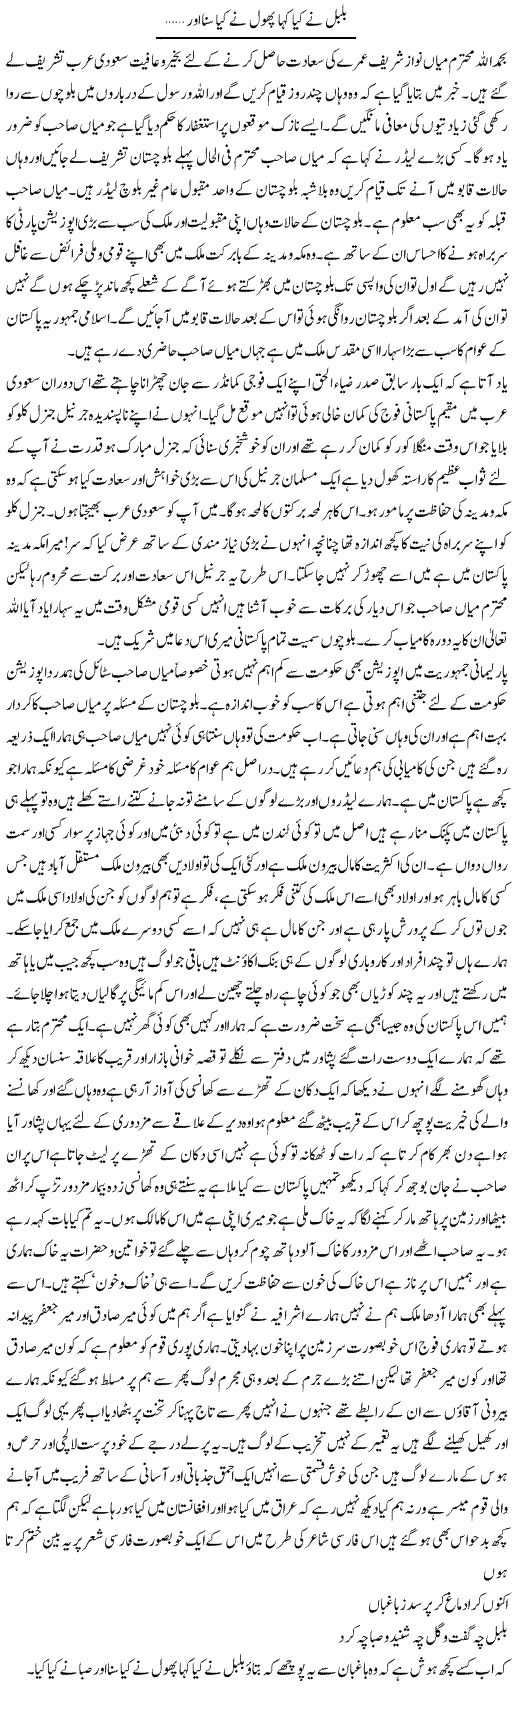 Balochistan Express Column Abdul Qadir 25 February 2012